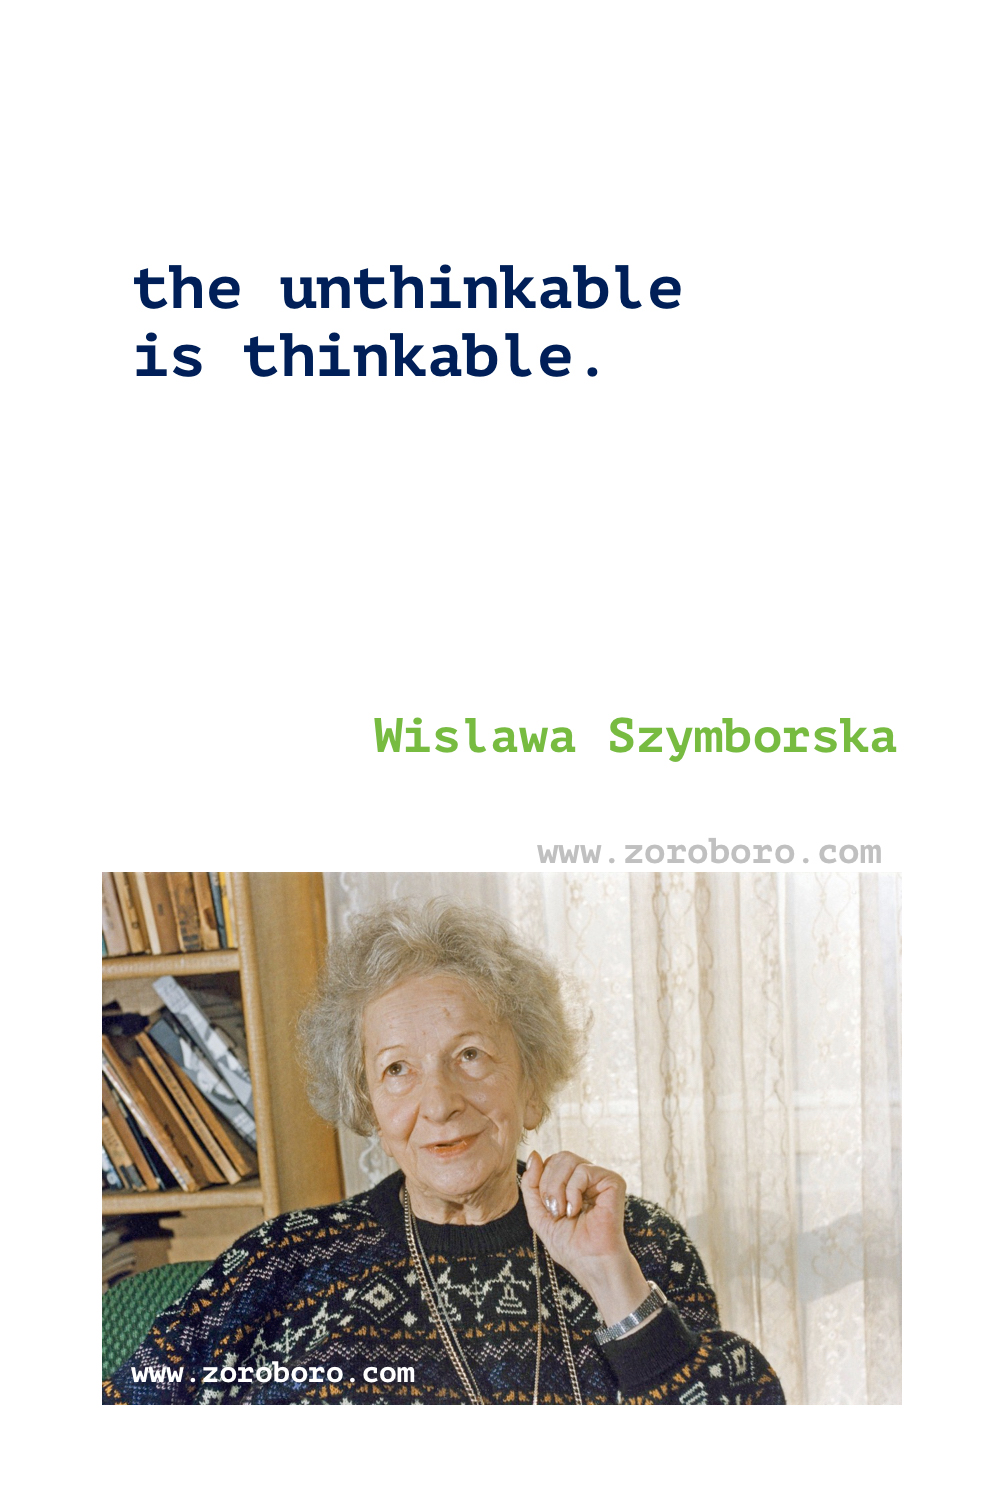 Wislawa Szymborska Quotes. Wislawa Szymborska Poems. Poetry. Poems Of Wisława Szymborska. Wisława Szymborska Books Quotes.